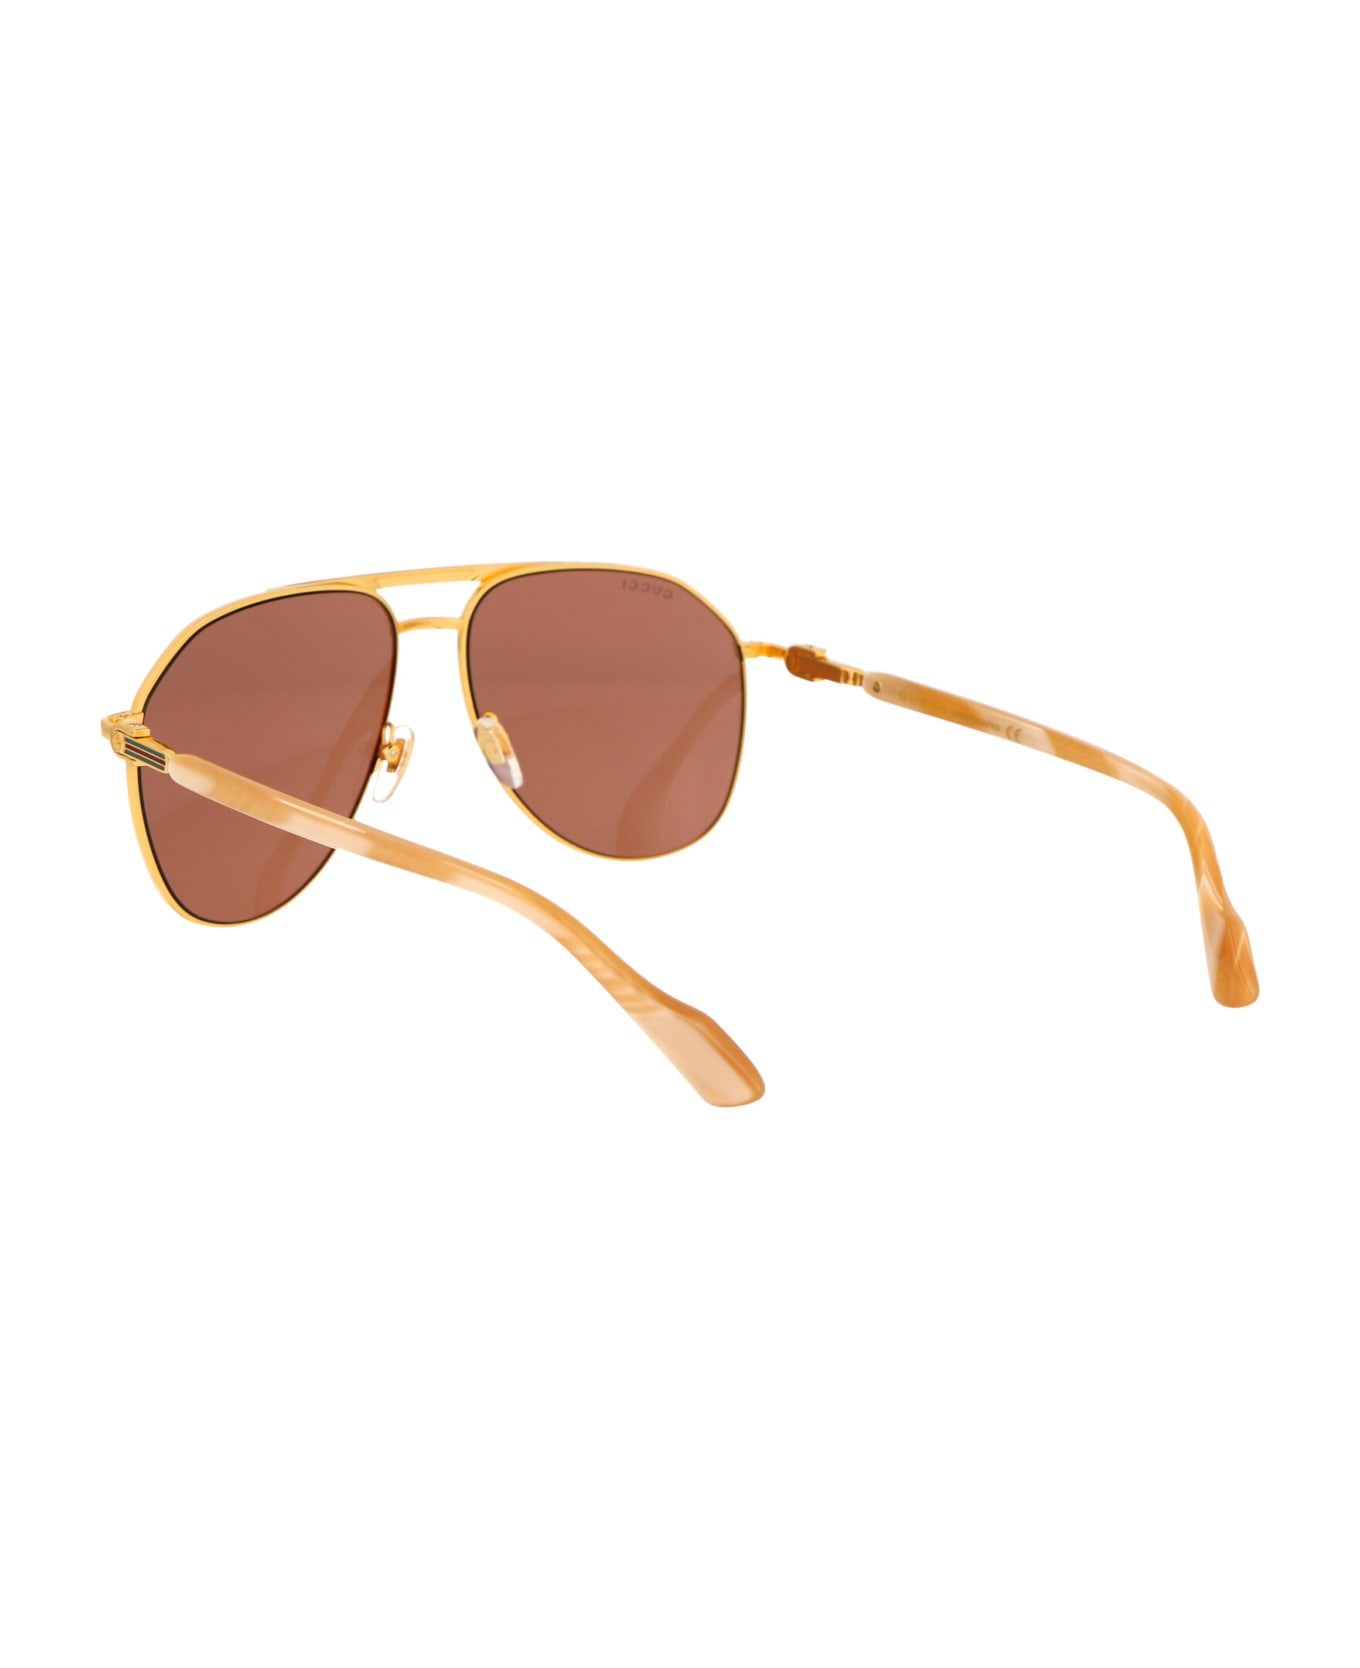 Gucci Eyewear Gg1220s Sunglasses - 003 GOLD GOLD BROWN サングラス